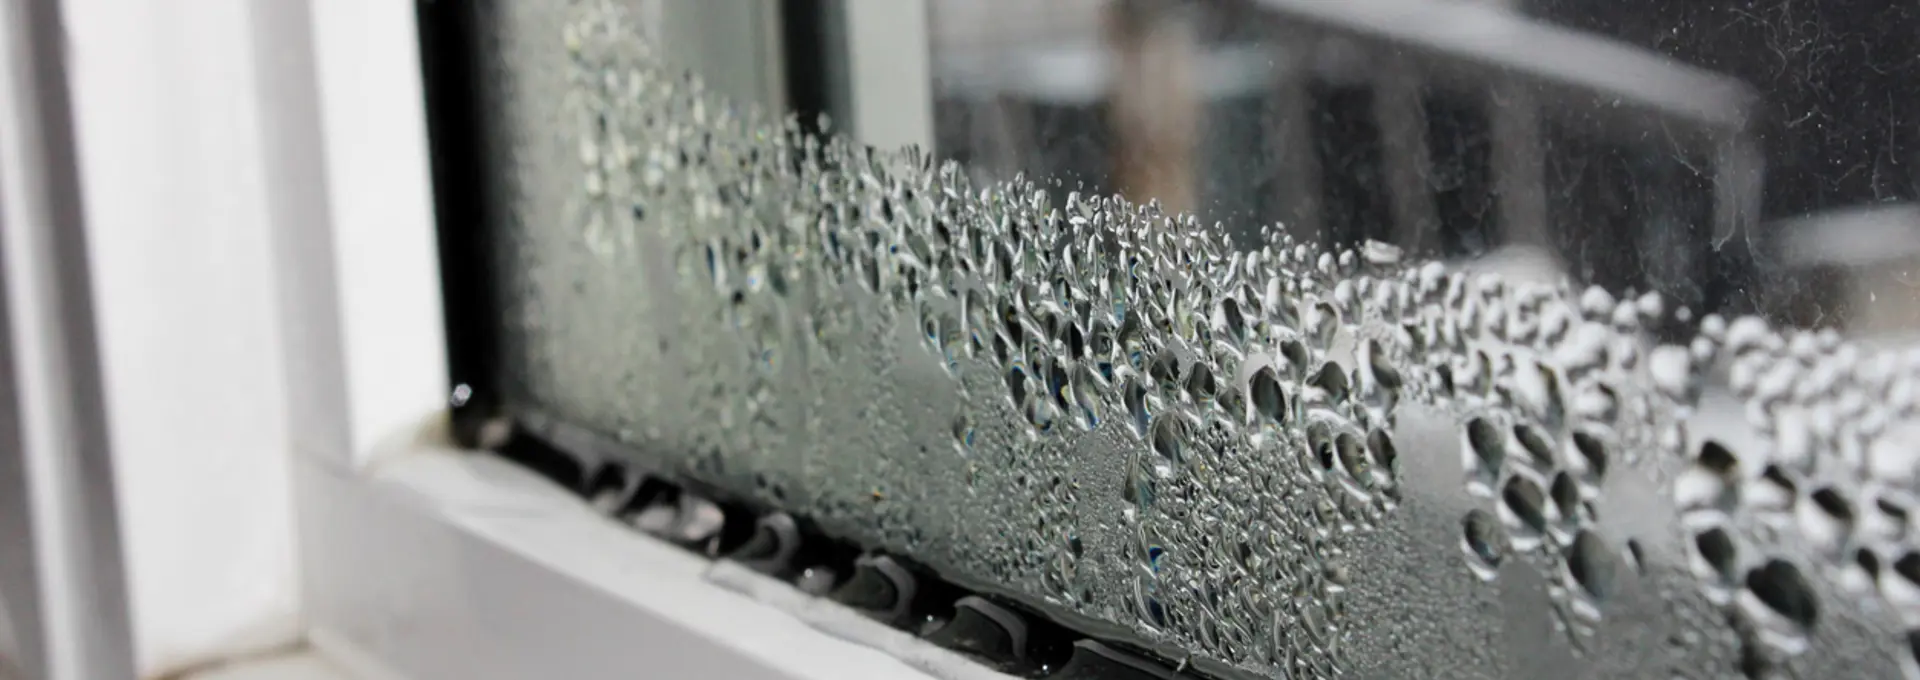 Condensation On Window - stock